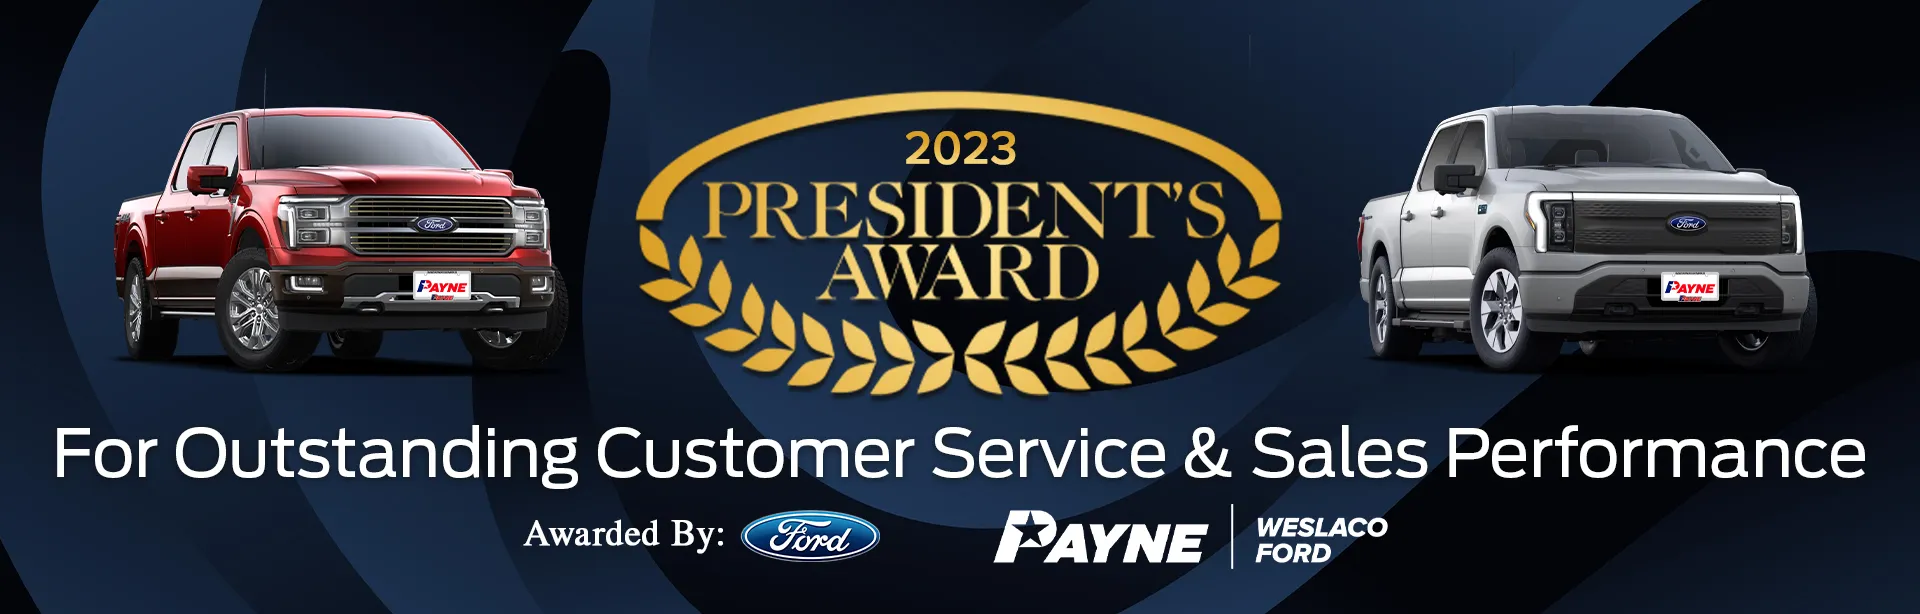 Payne Weslaco Ford 2023 President Award 